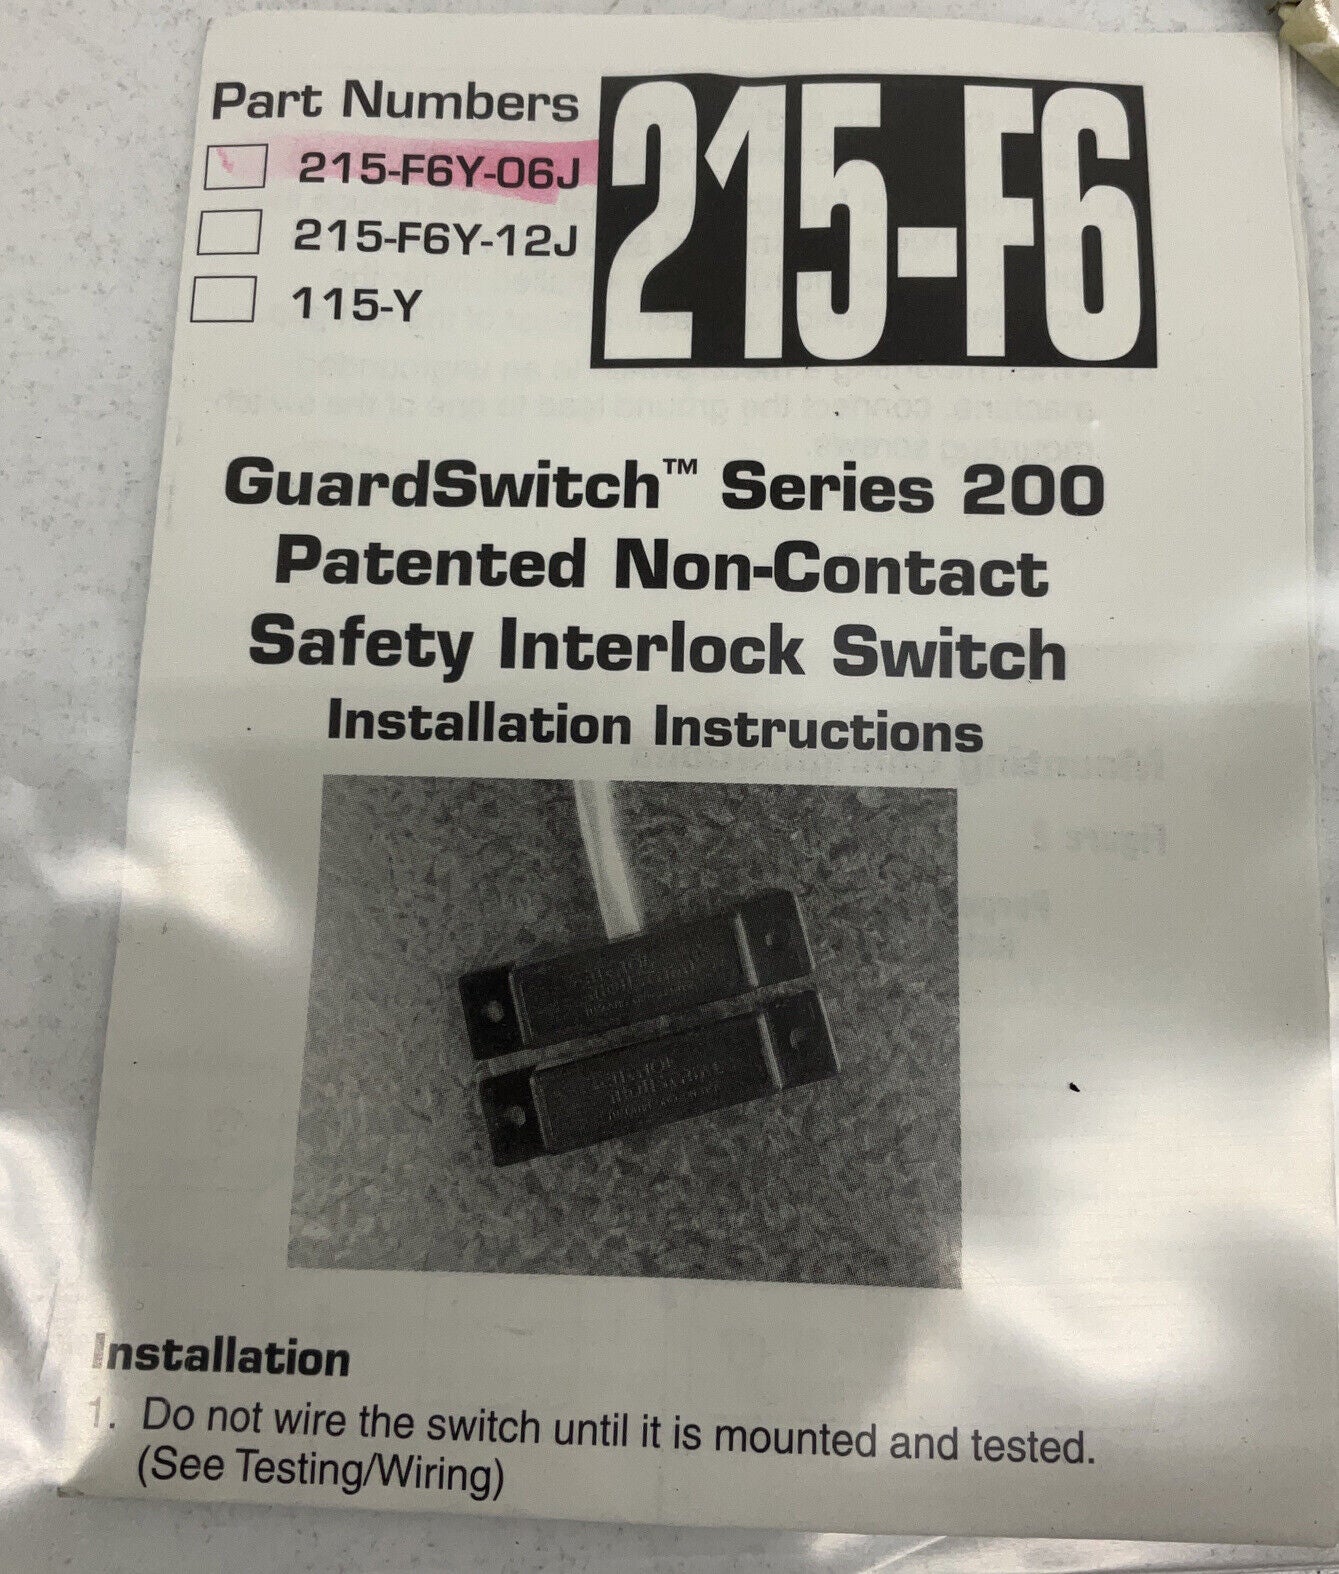 GE Sentrol Industrial 215-F6Y-06J Safety Interlock Switch GuardSwitch (CL269)